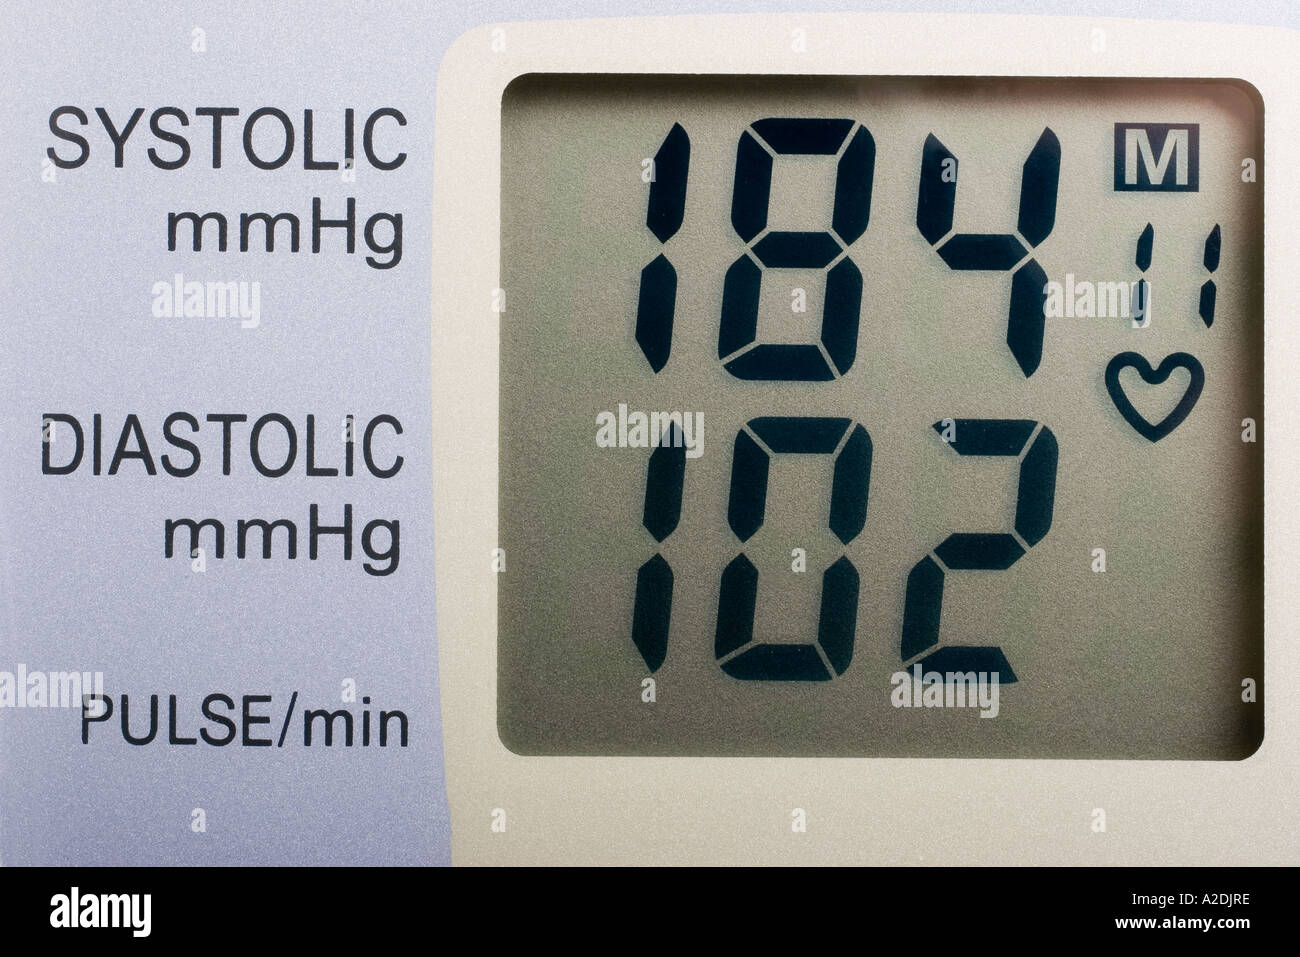 https://c8.alamy.com/comp/A2DJRE/digital-display-of-a-blood-pressure-monitor-showing-high-blood-pressure-A2DJRE.jpg